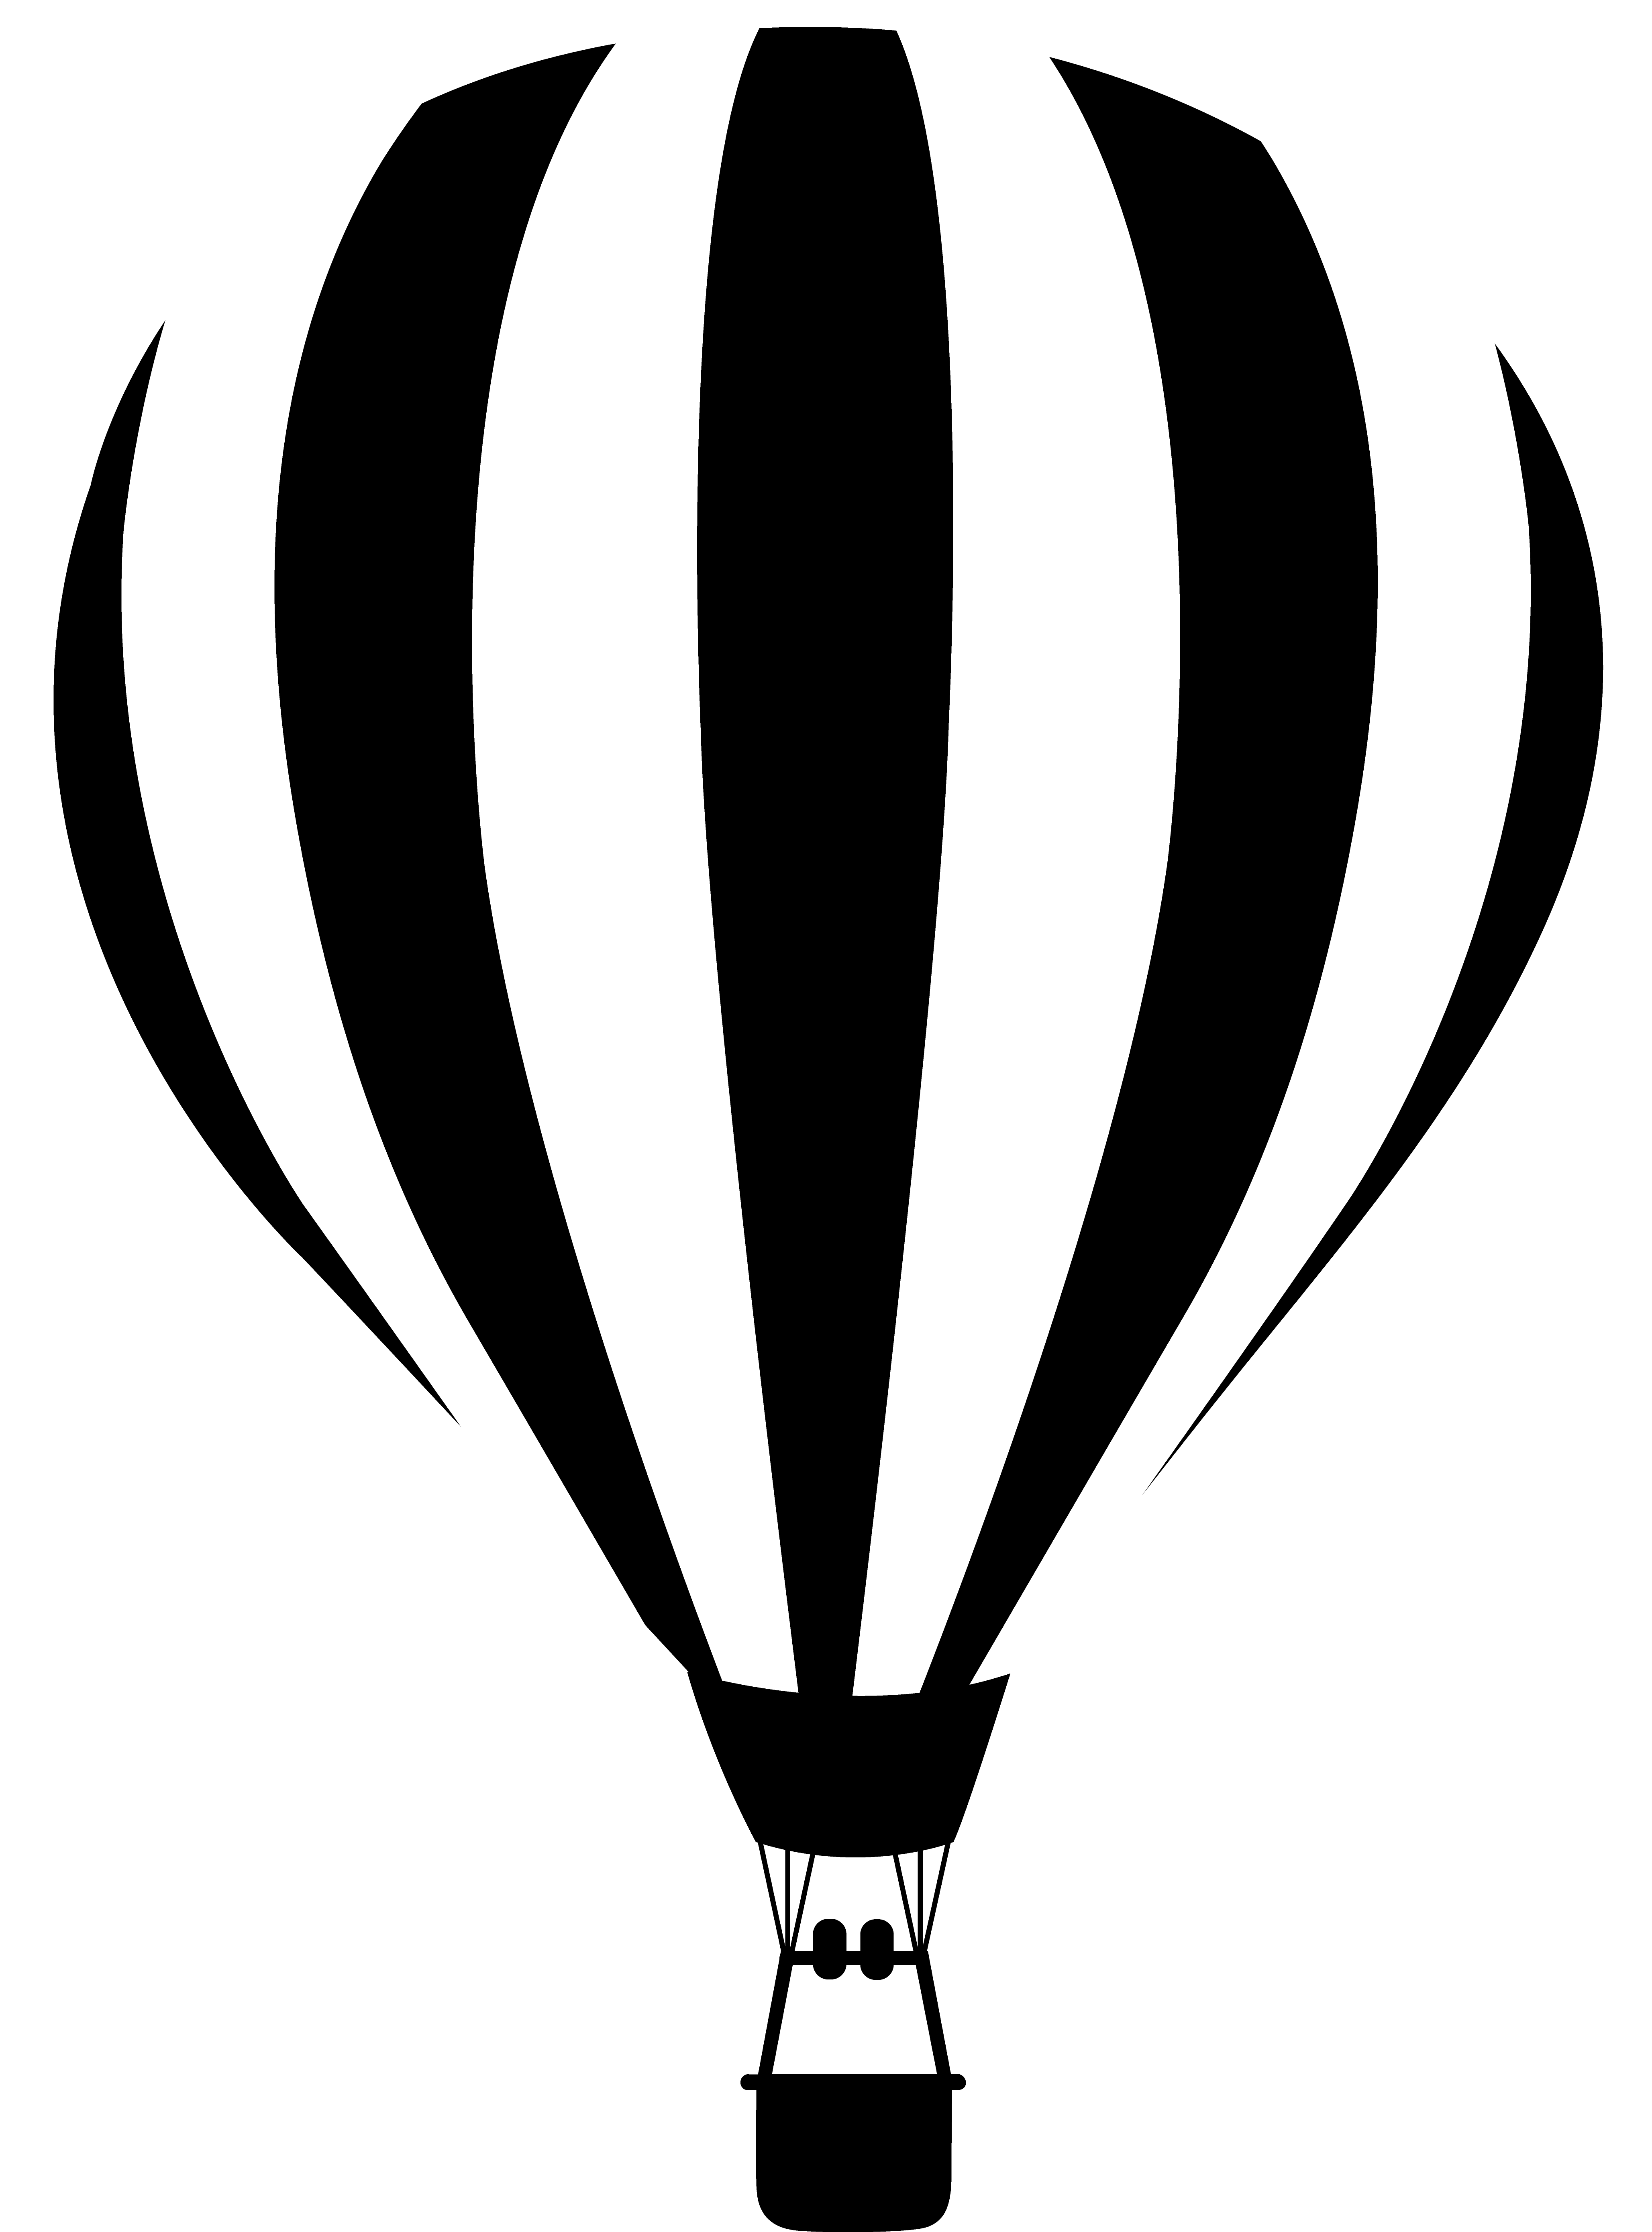 Free Hot Air Balloon Vector | Free Download Clip Art | Free Clip ...